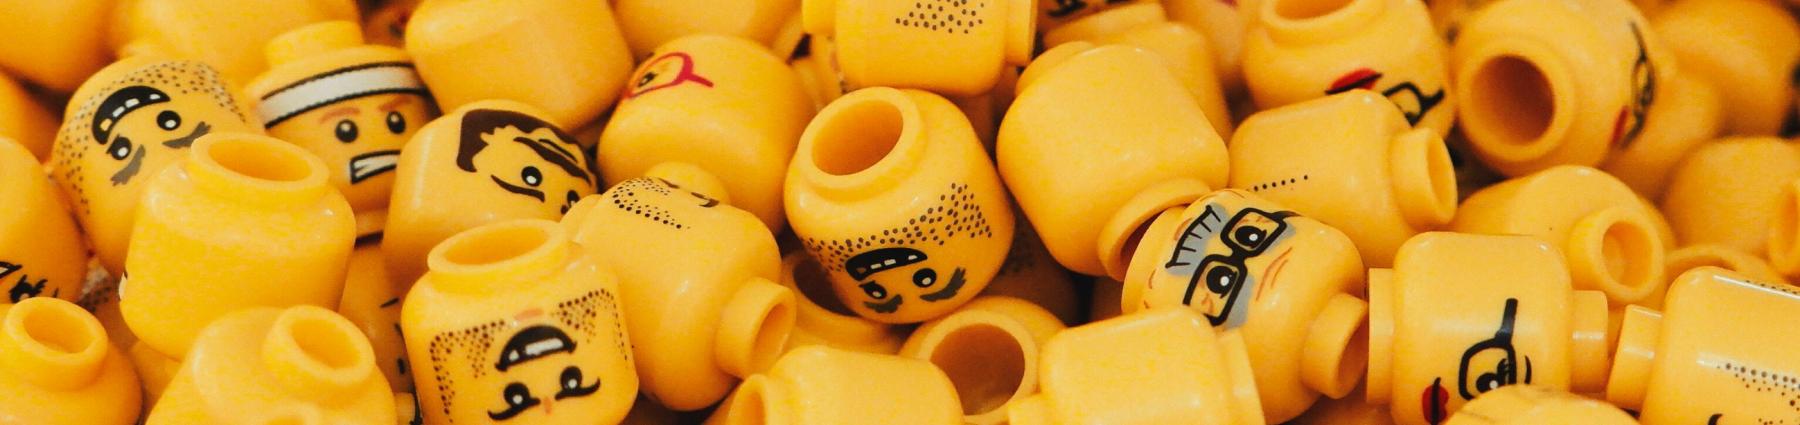 Lego Photo by Carson Arias on Unsplash